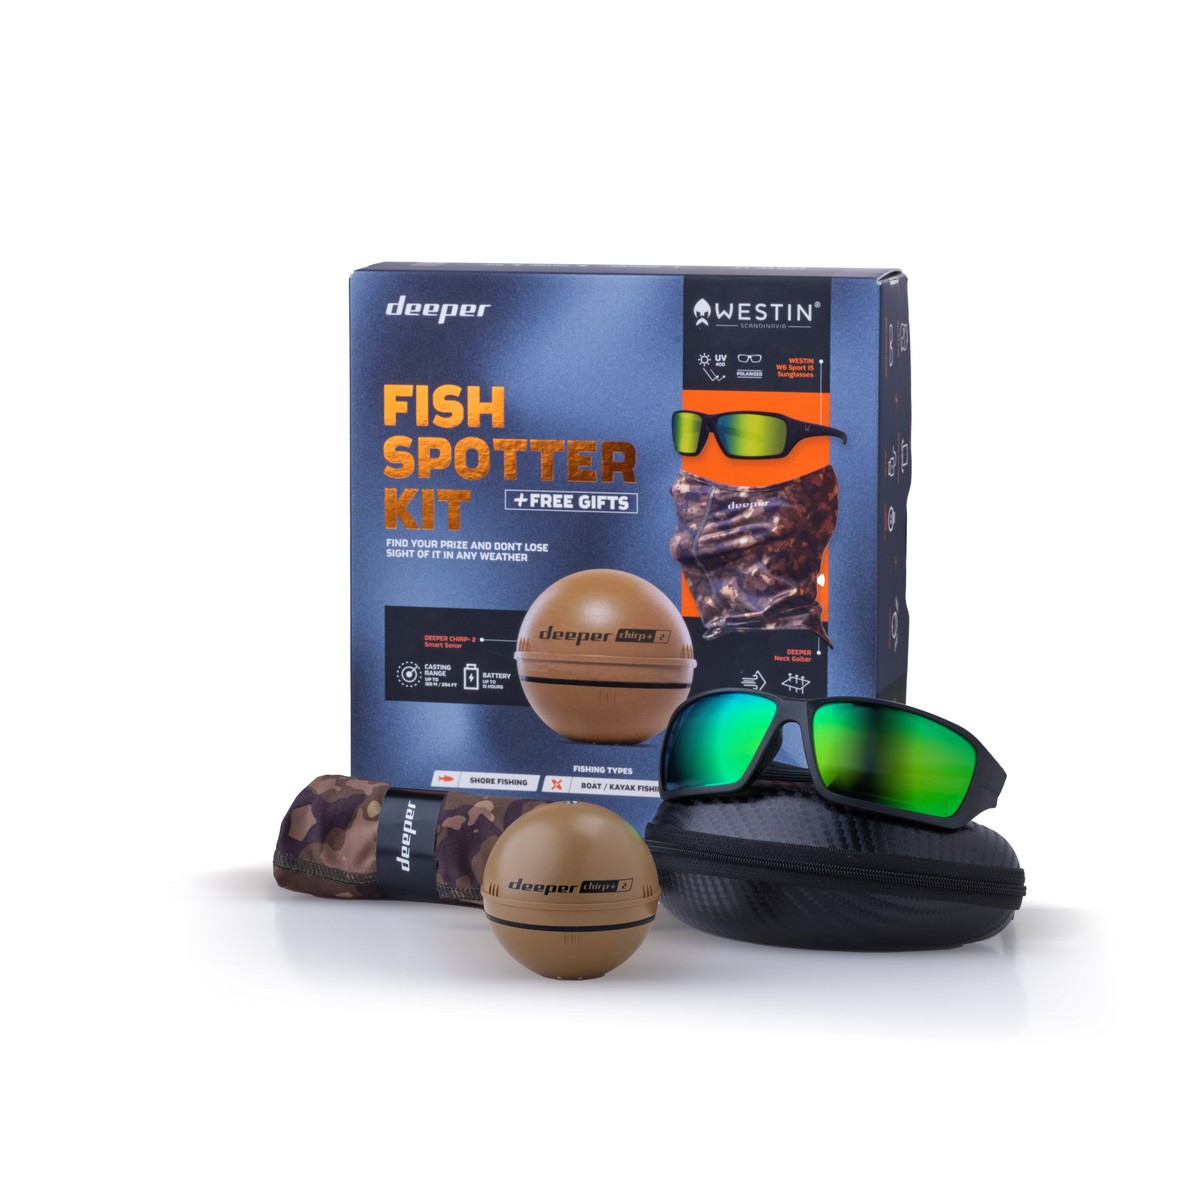 Deeper Smart Sonar Chirp+ 2 - Fish Spotter kit